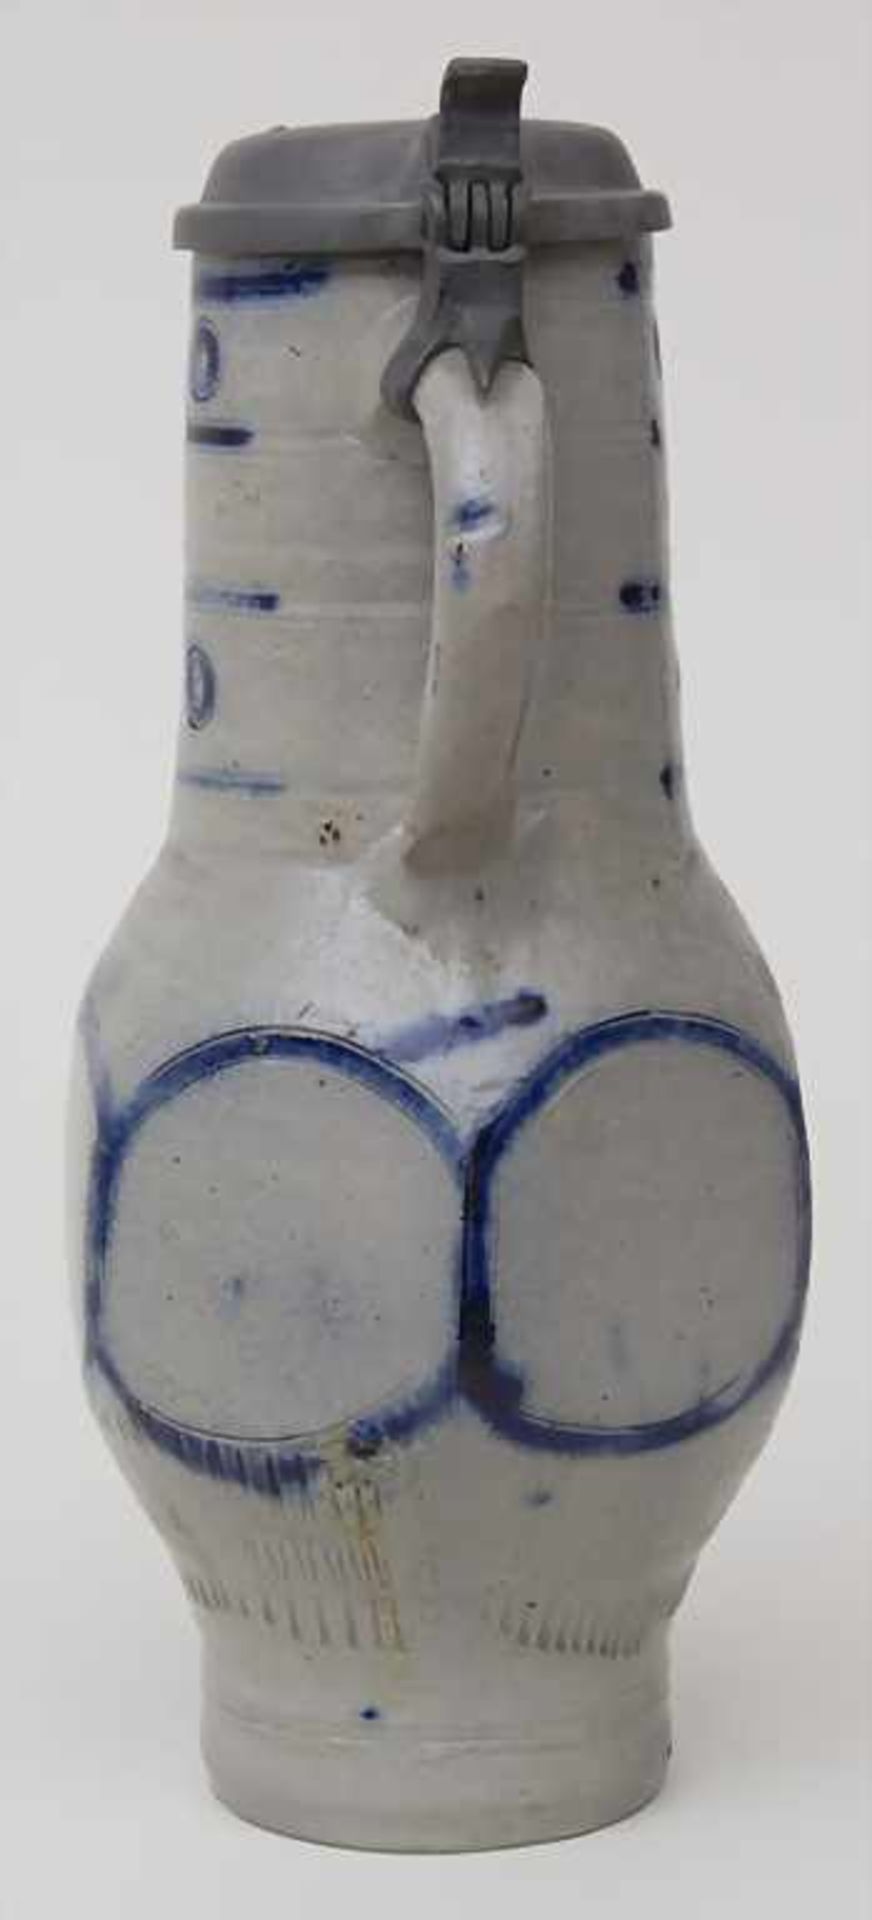 Deckelkrug / A covered jug, 19. Jh.Material: Keramik, Salzglasur mit Blaumalerei, Zinndeckel, Marke: - Bild 4 aus 7